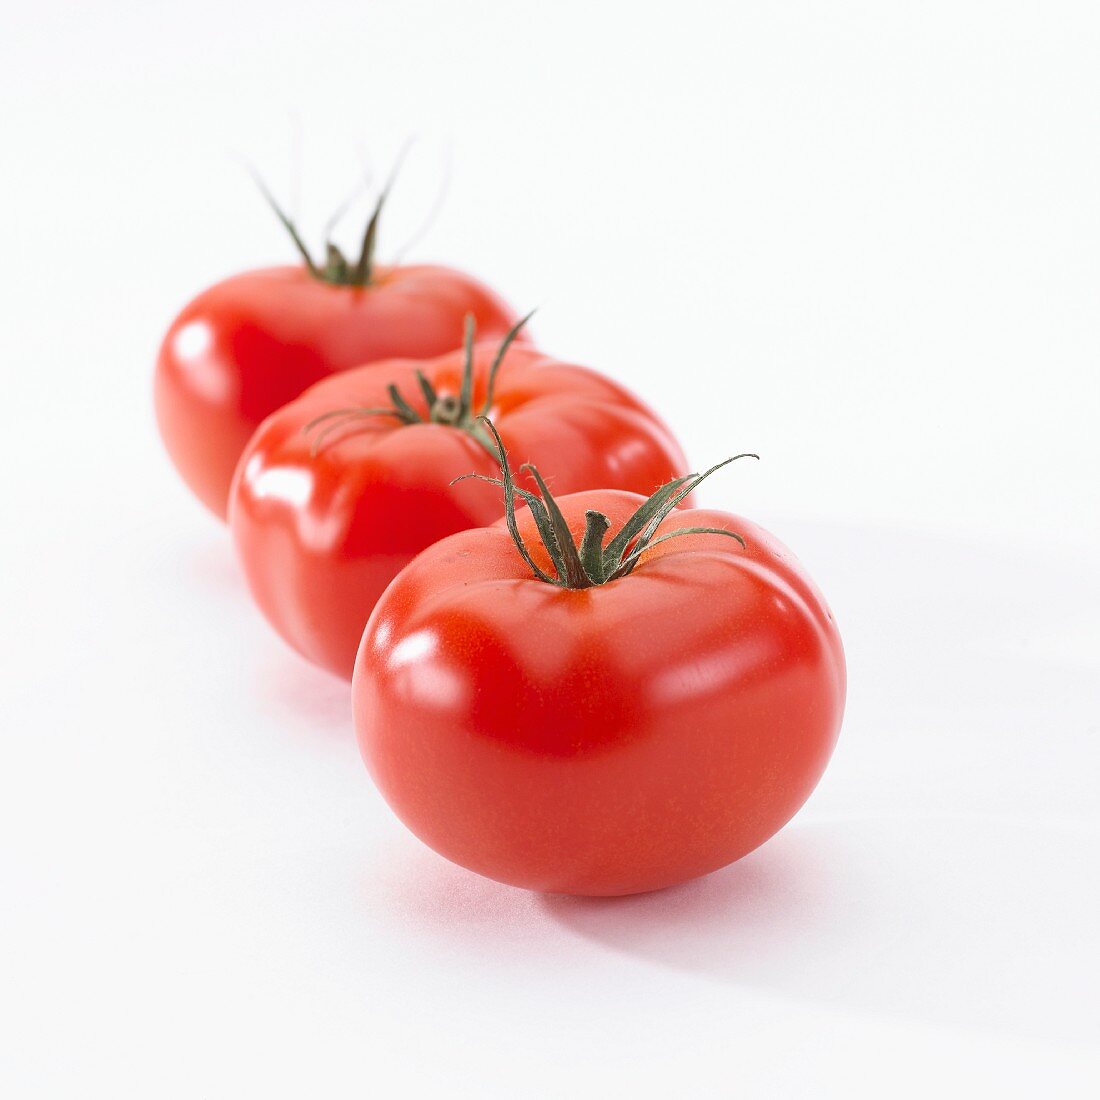 Three tomatoes (Lycopersicon Esculentum)